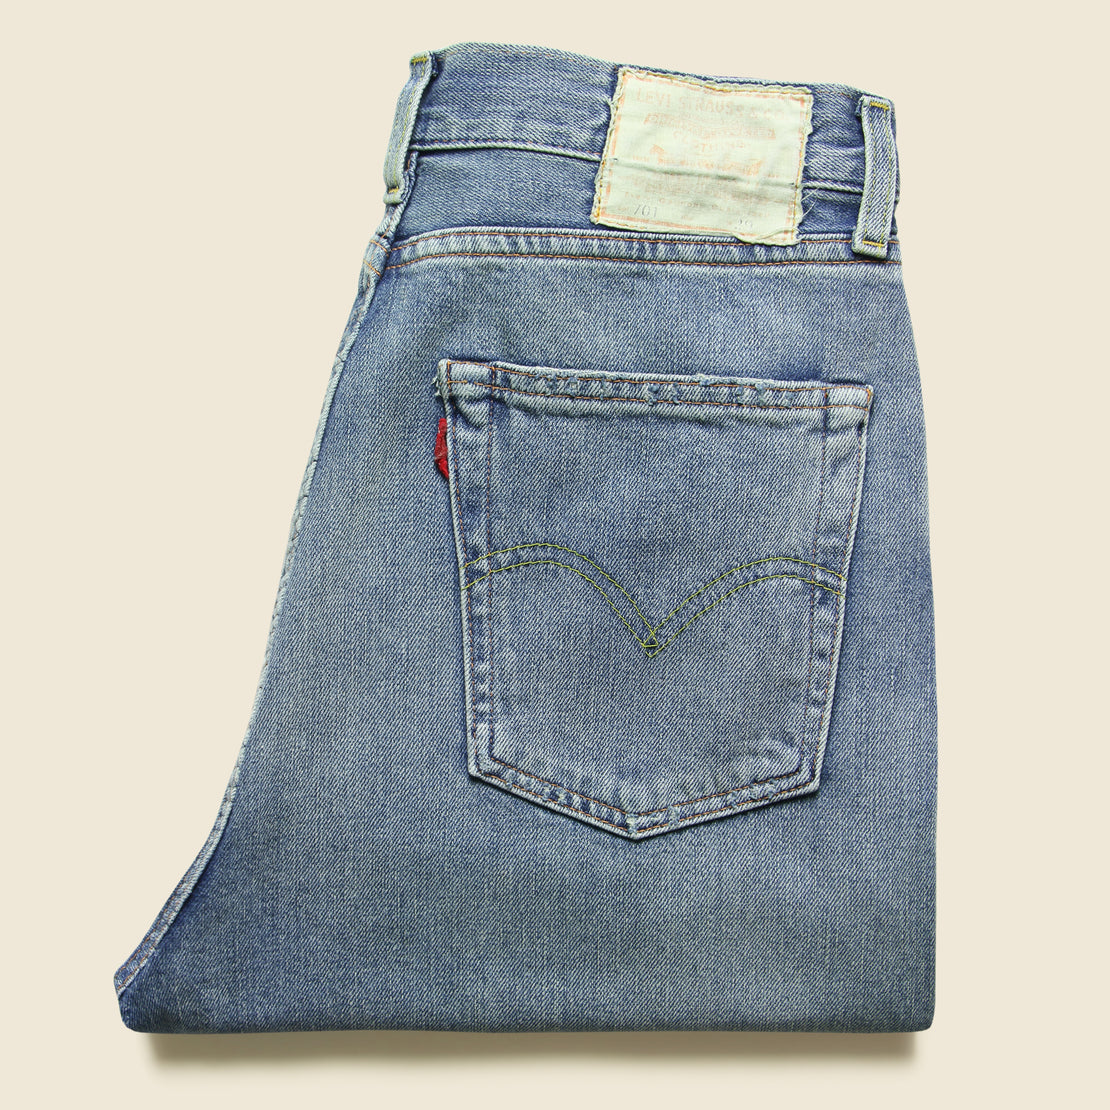 1950s 701 Jean - Del Mar Wash - Levis Vintage Clothing - STAG Provisions - W - Pants - Denim